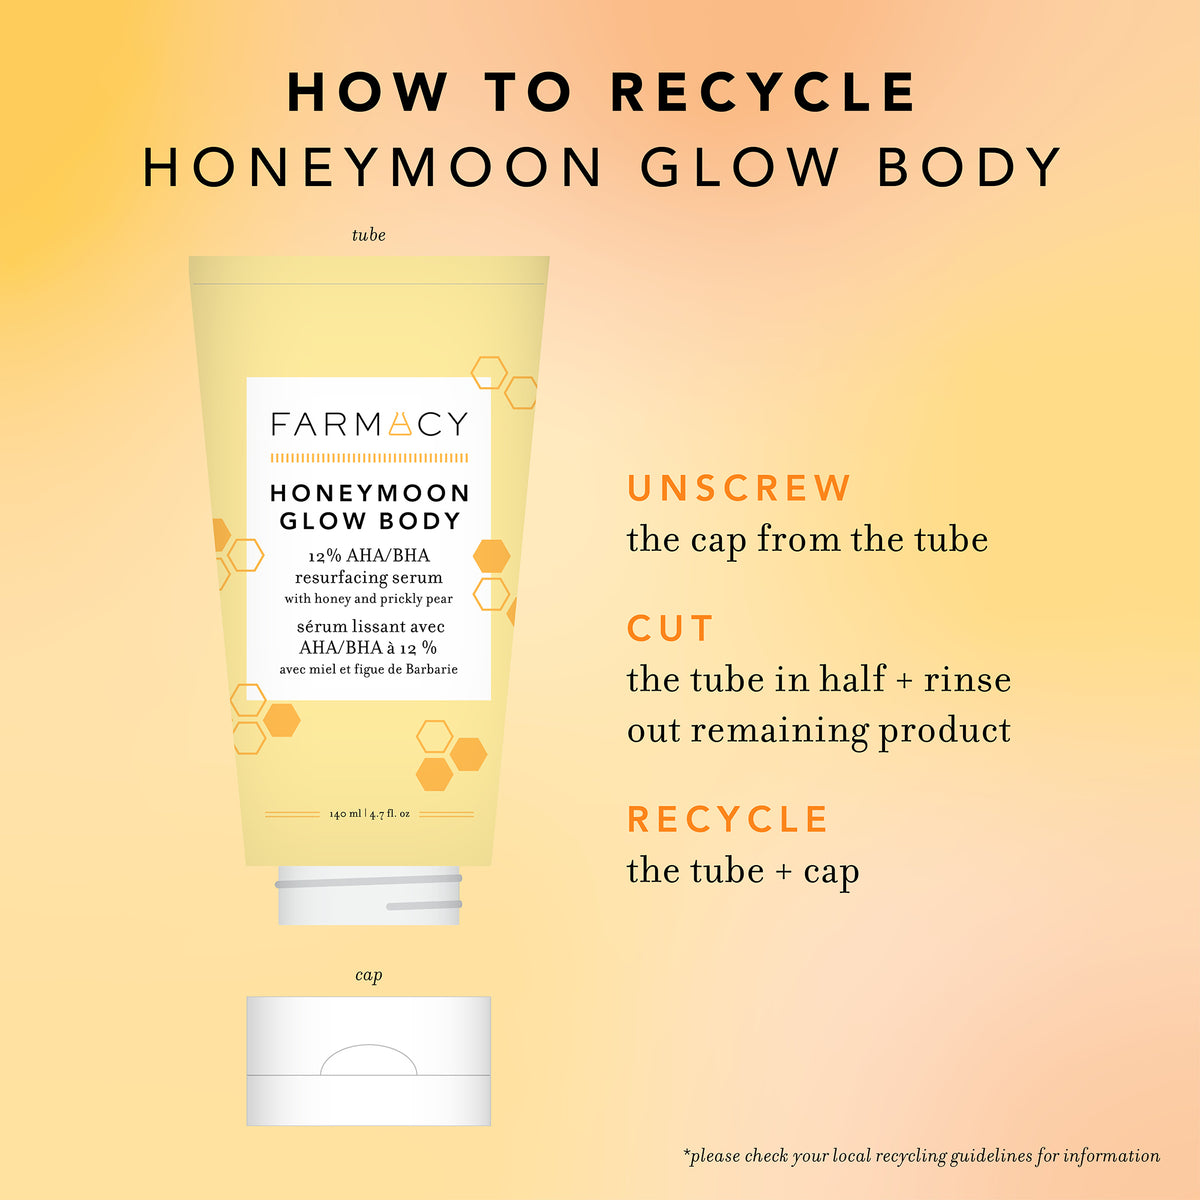 How to recycle Honeymoon glow body